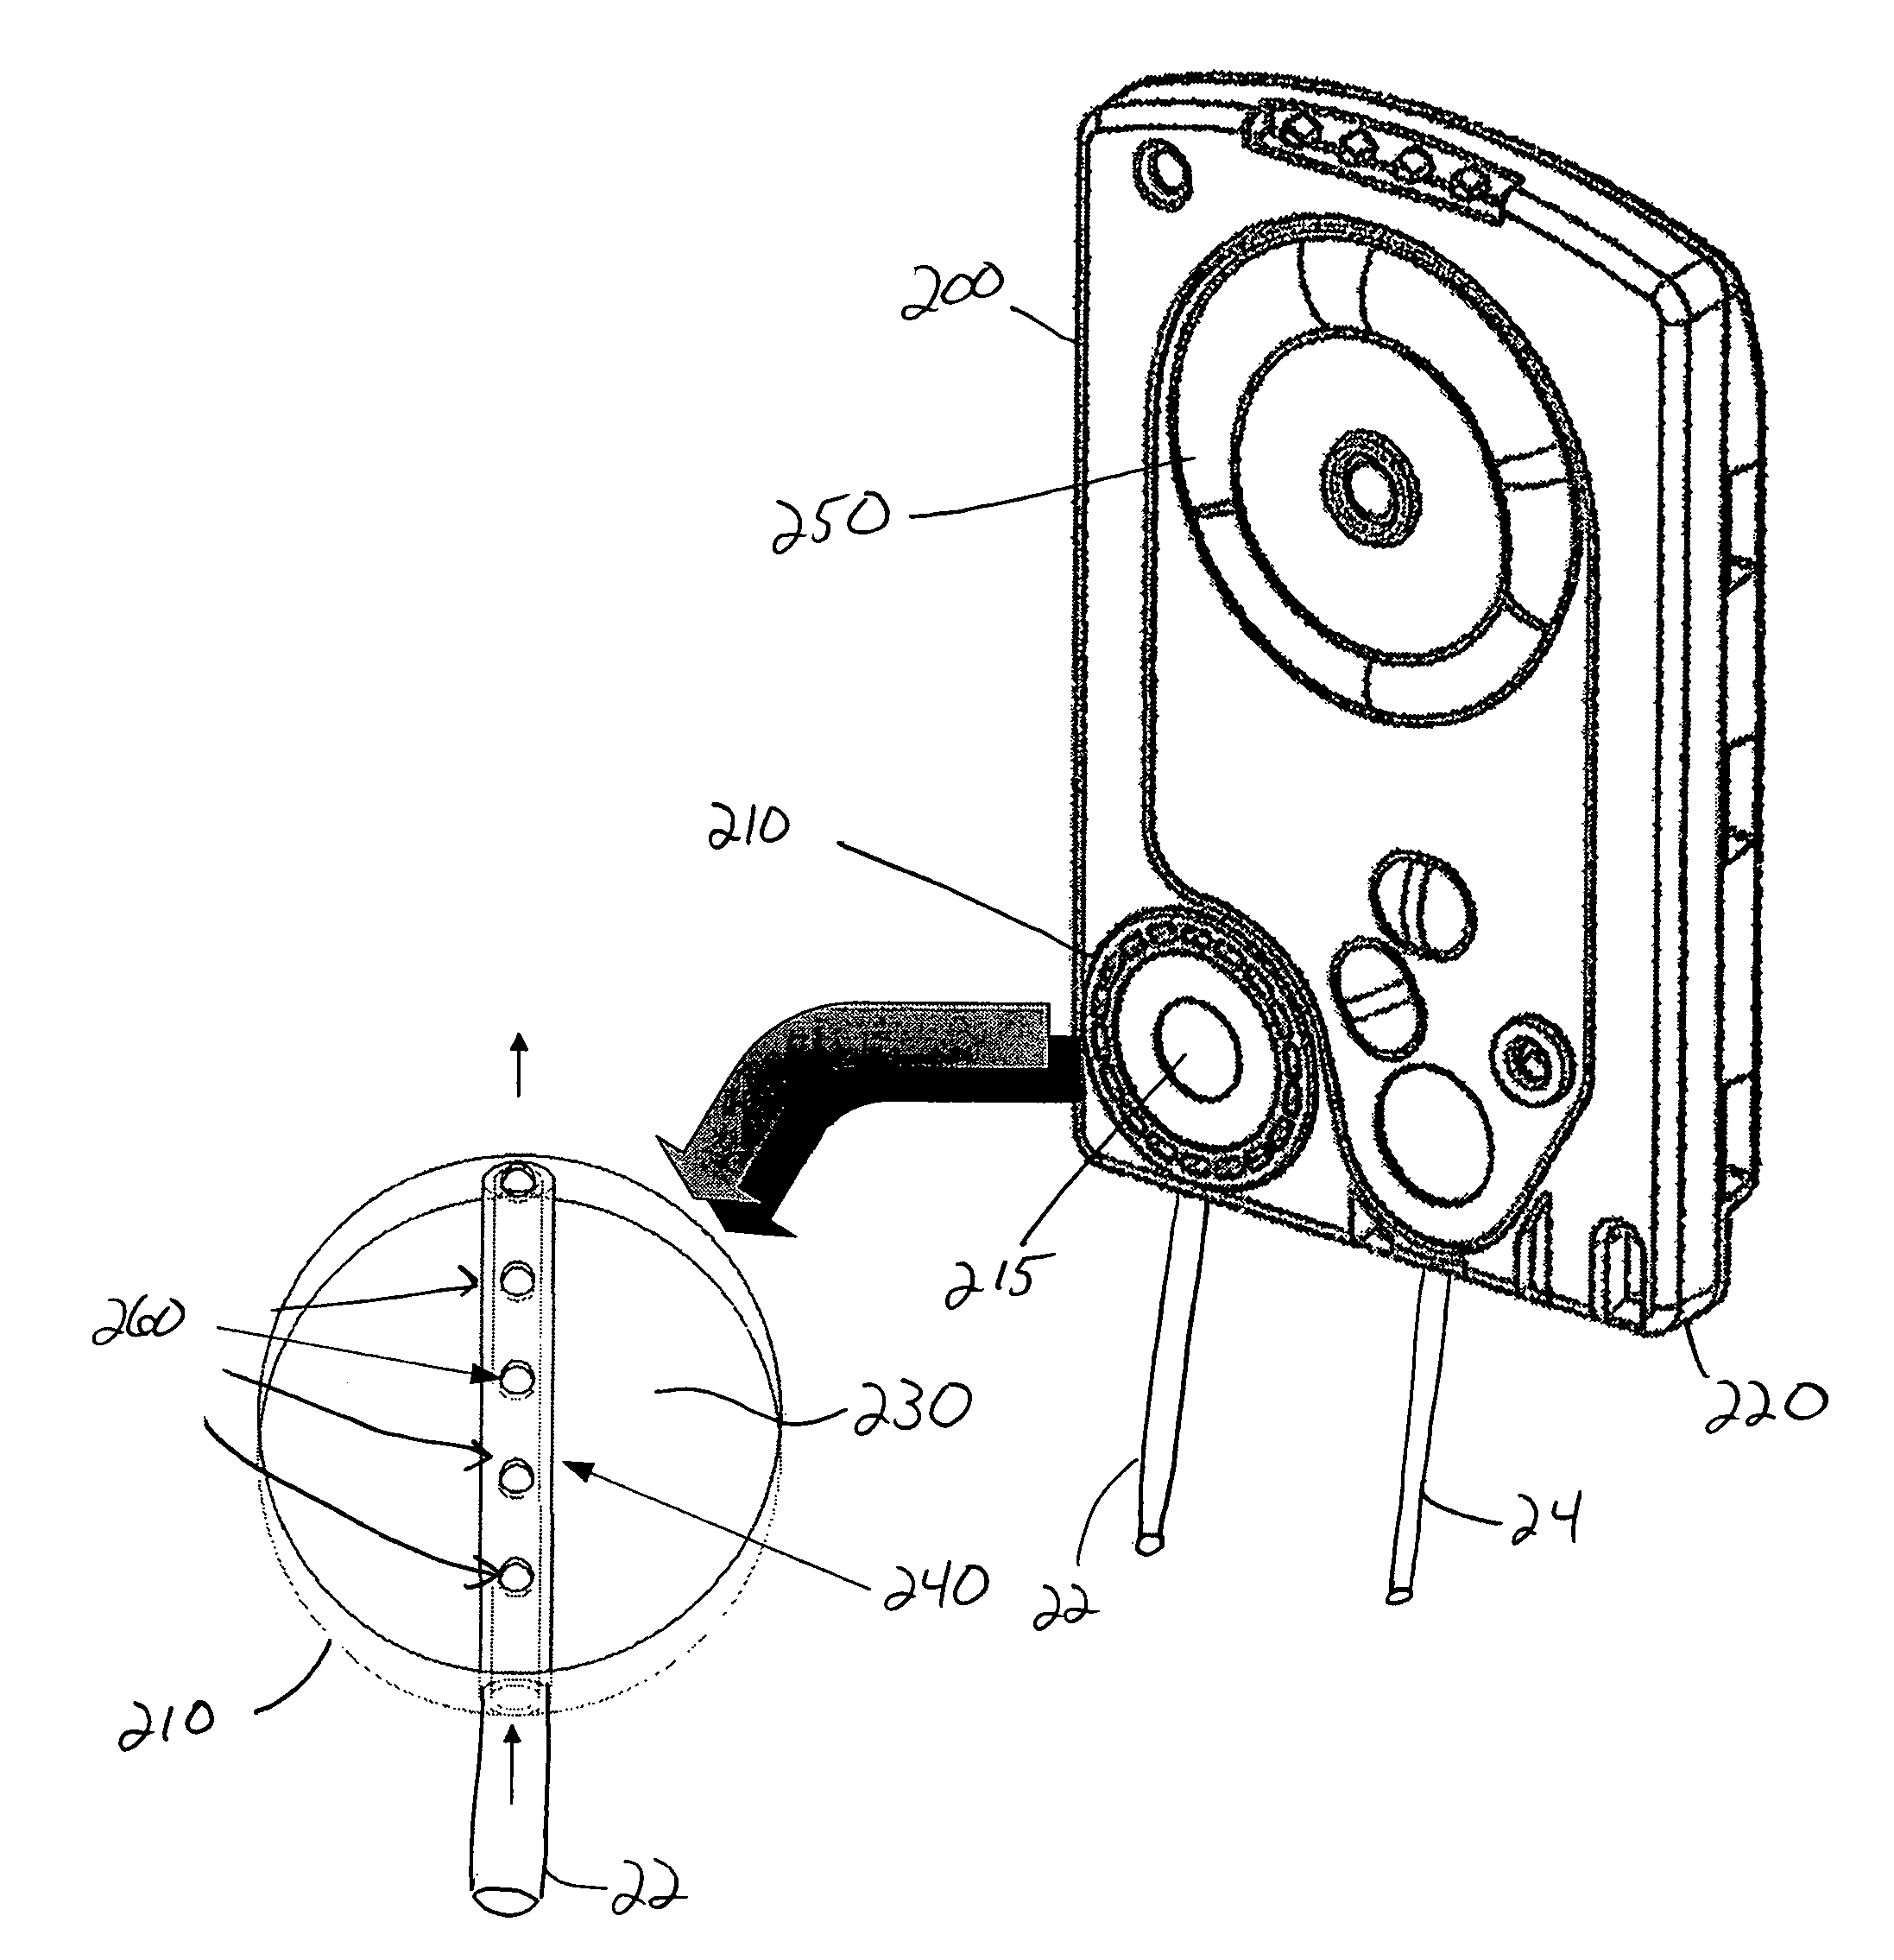 Fluid pressure sensing chamber